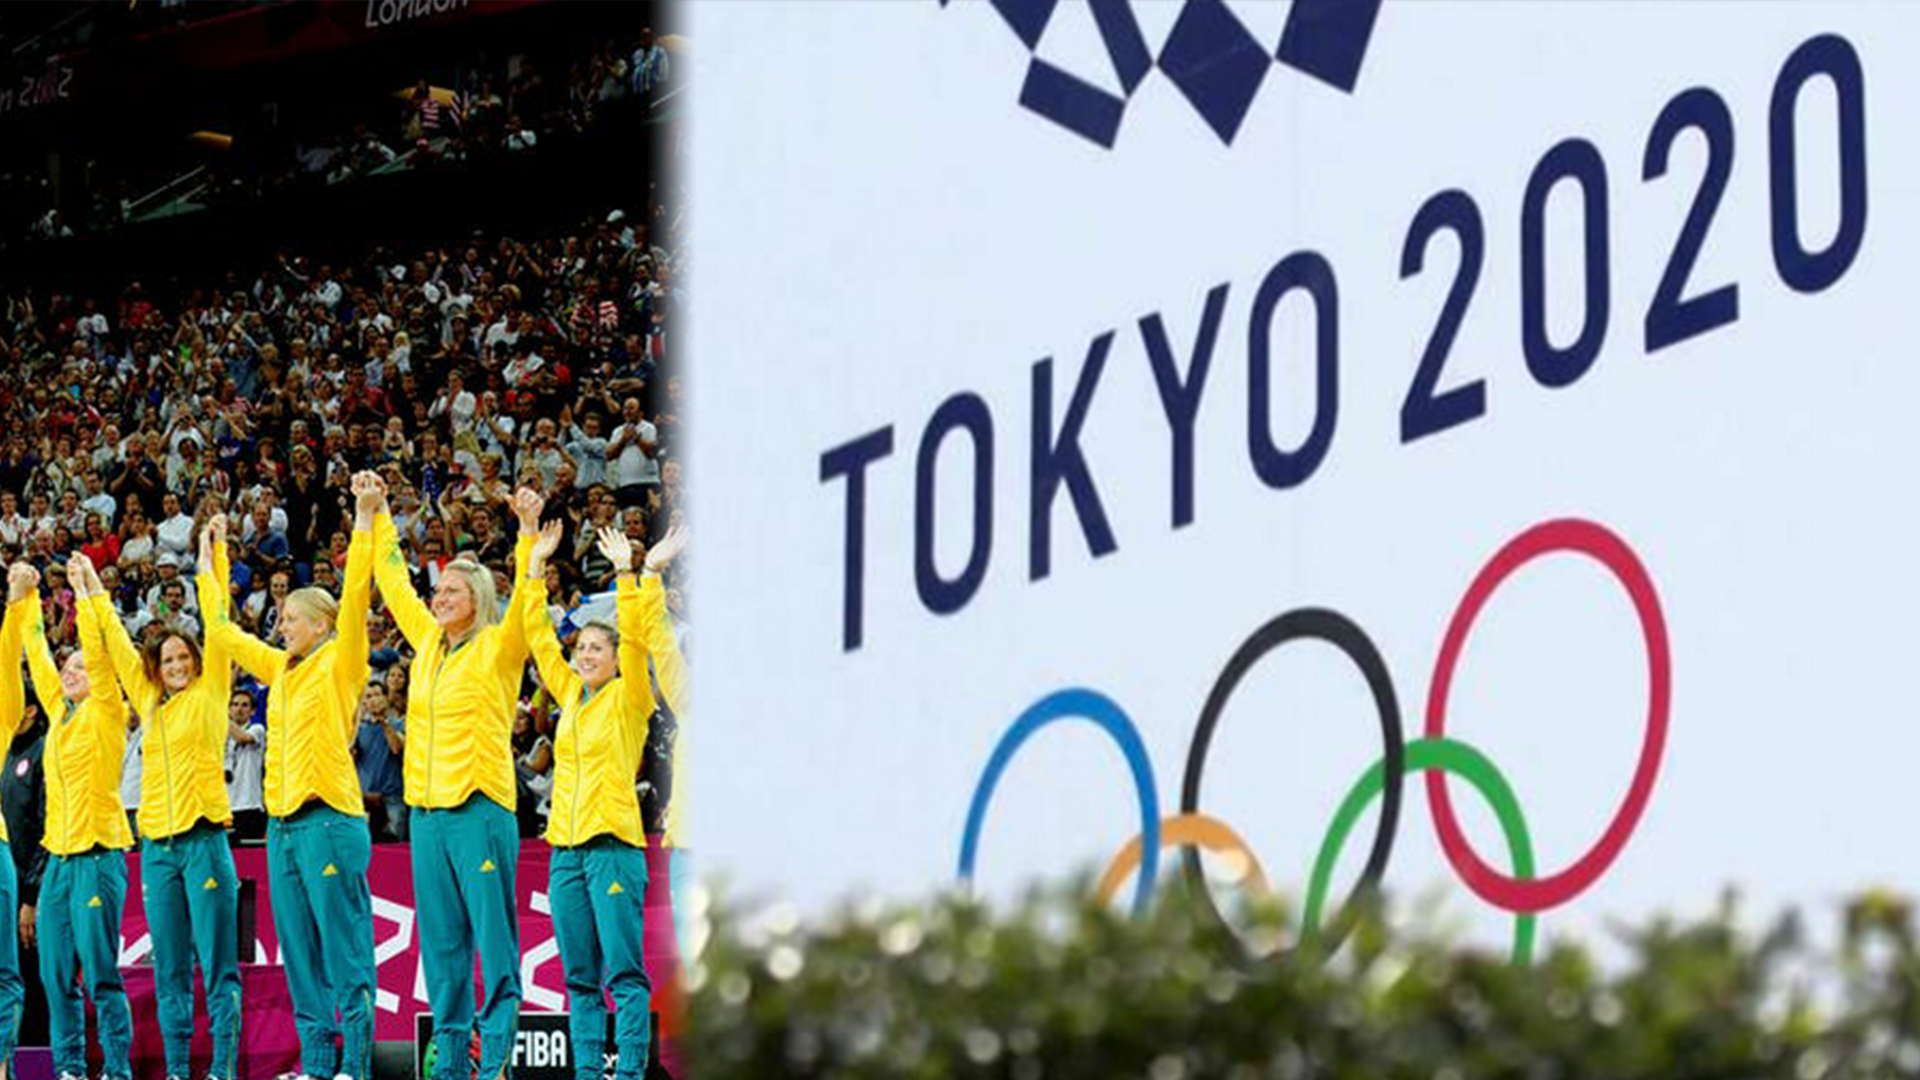 australia olympic games tokyo 2020